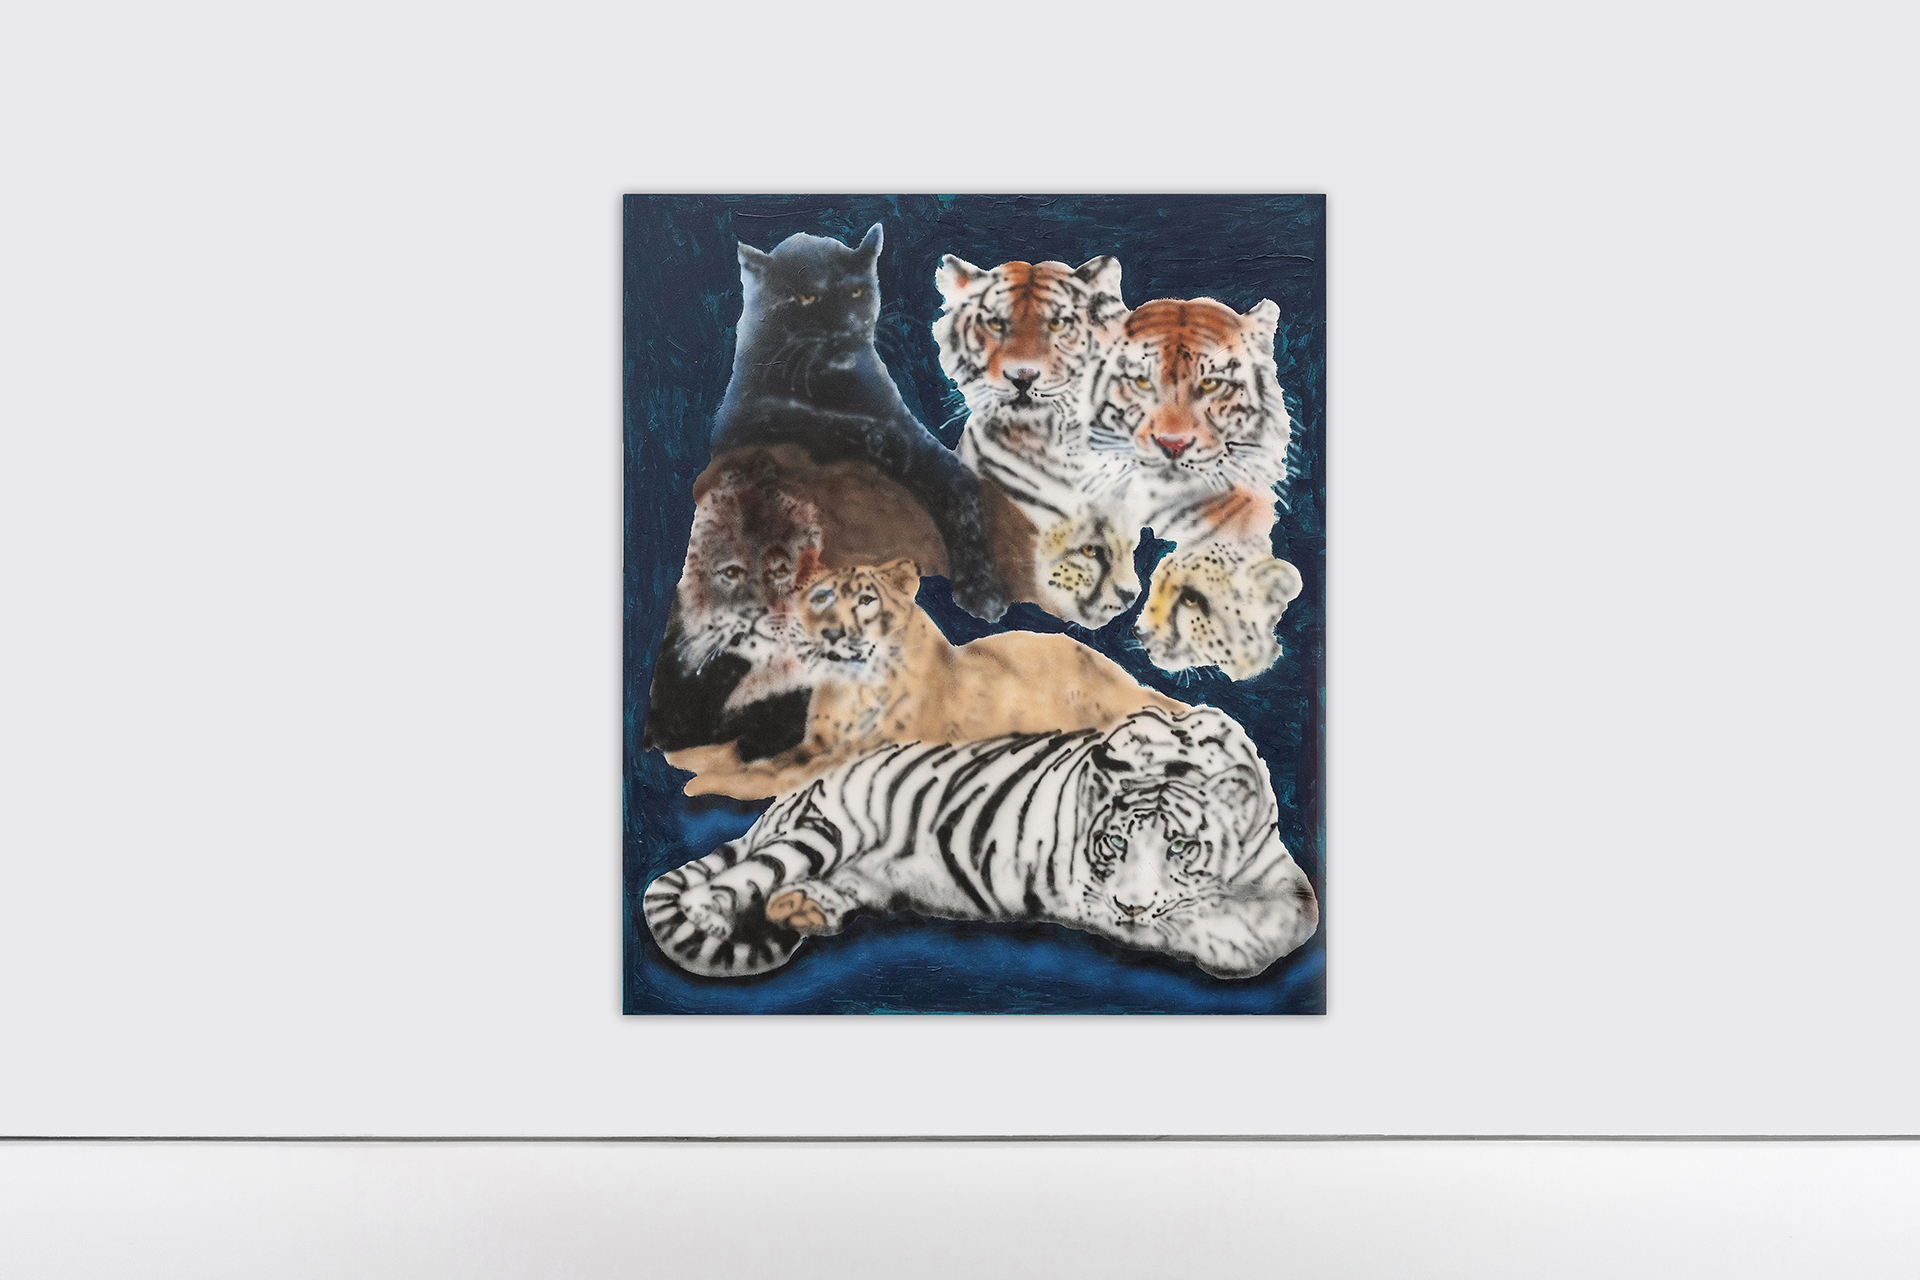 Ricardo Passaporte, Group of cats, 2021, 245x220cm, Acrylic and spray paint on canvas